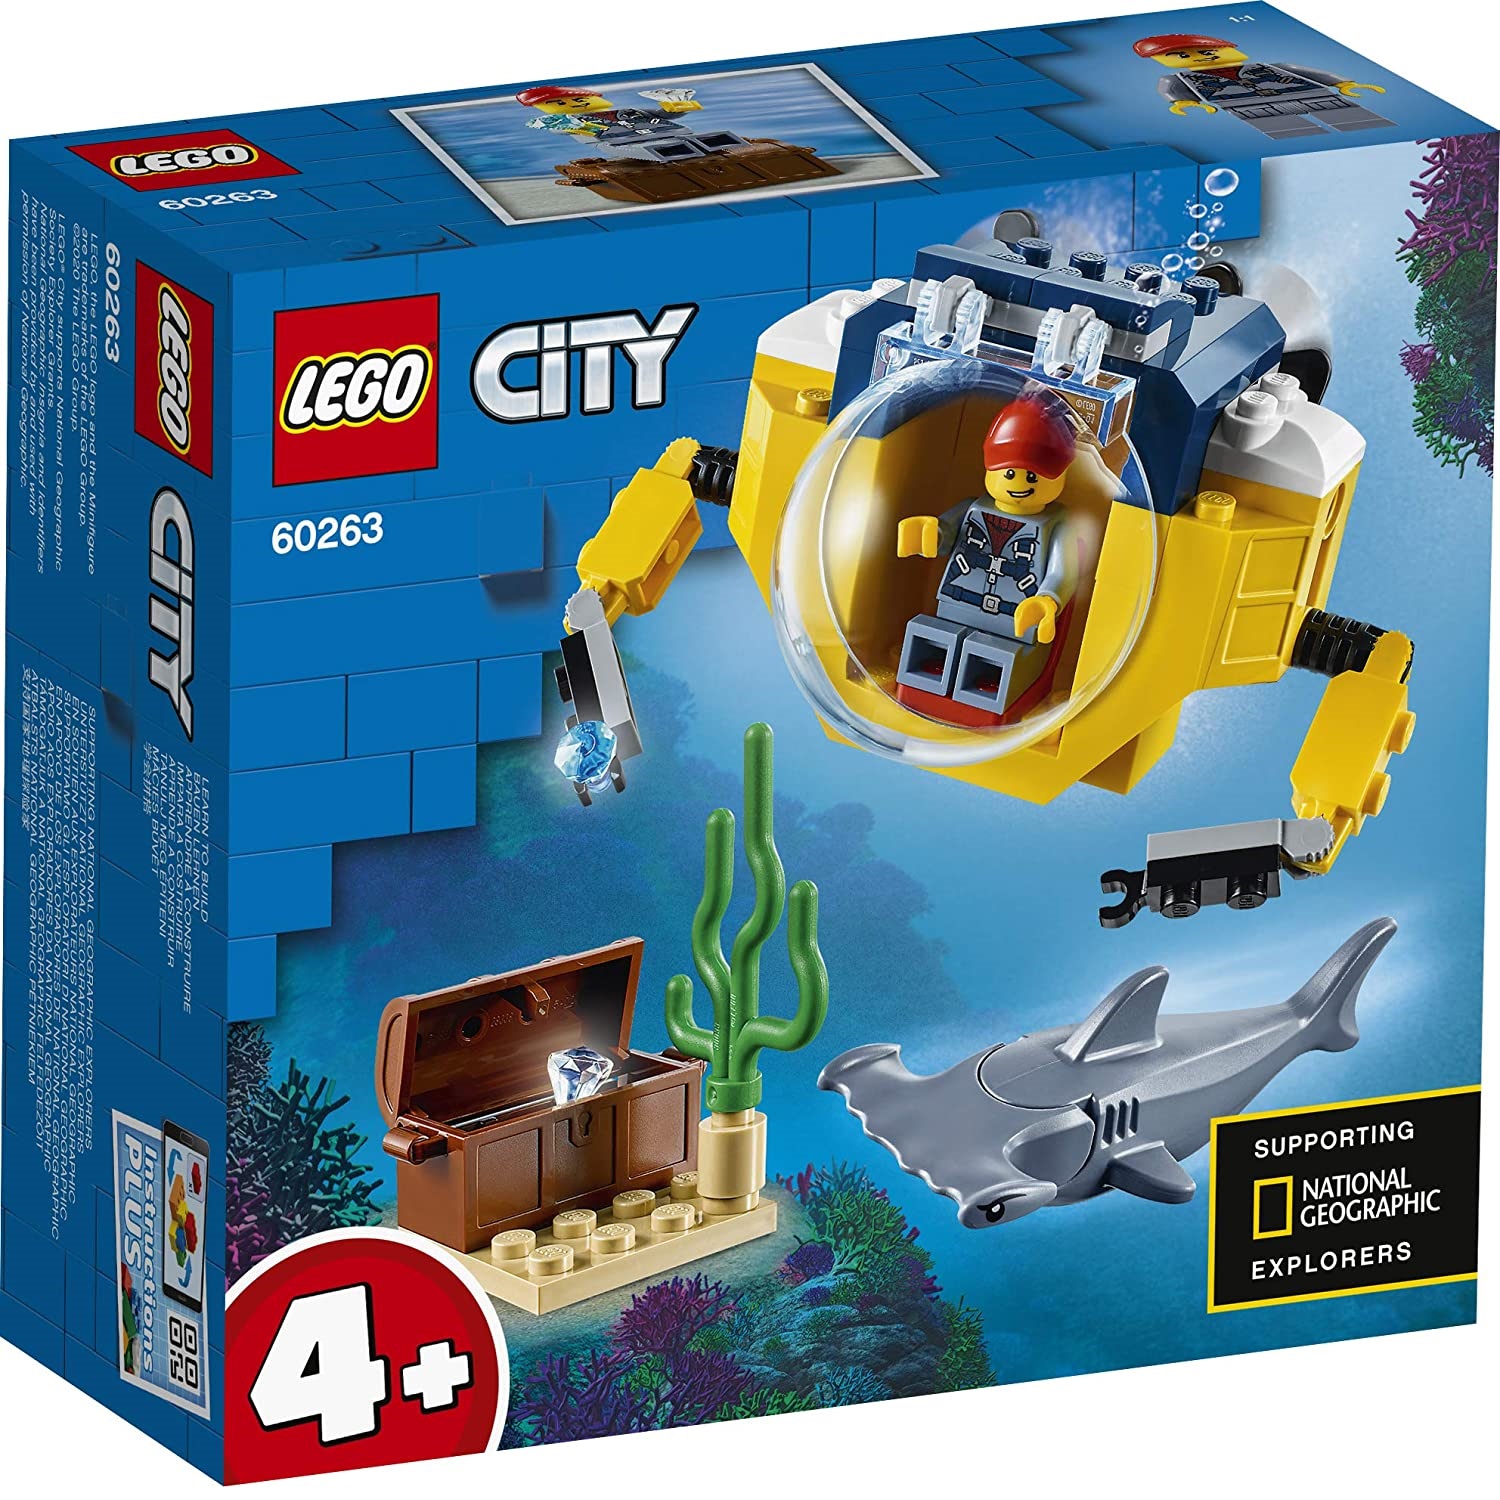 Minisubmarin Oceanic Lego City 60263, +4 ani, Lego